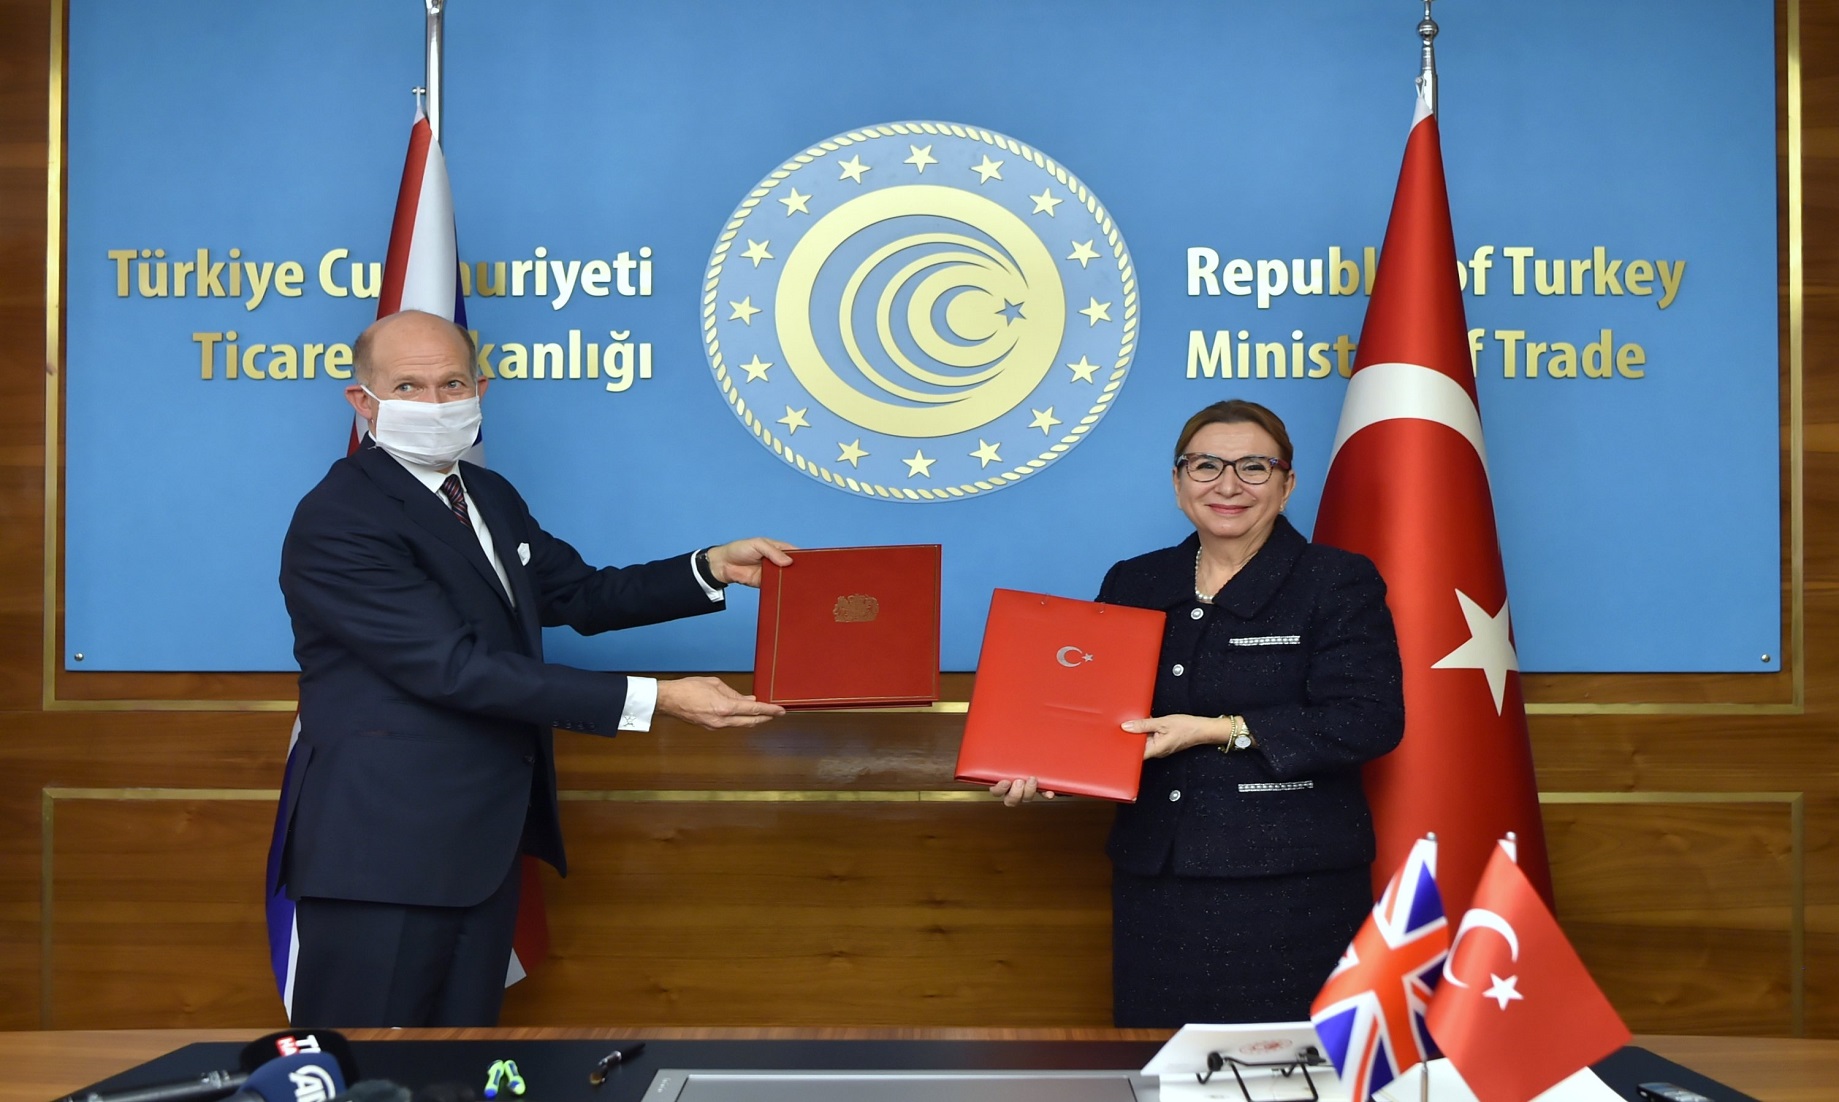 Türkiye, UK To Upgrade Free Trade Deal To Boost Economic Ties: FM